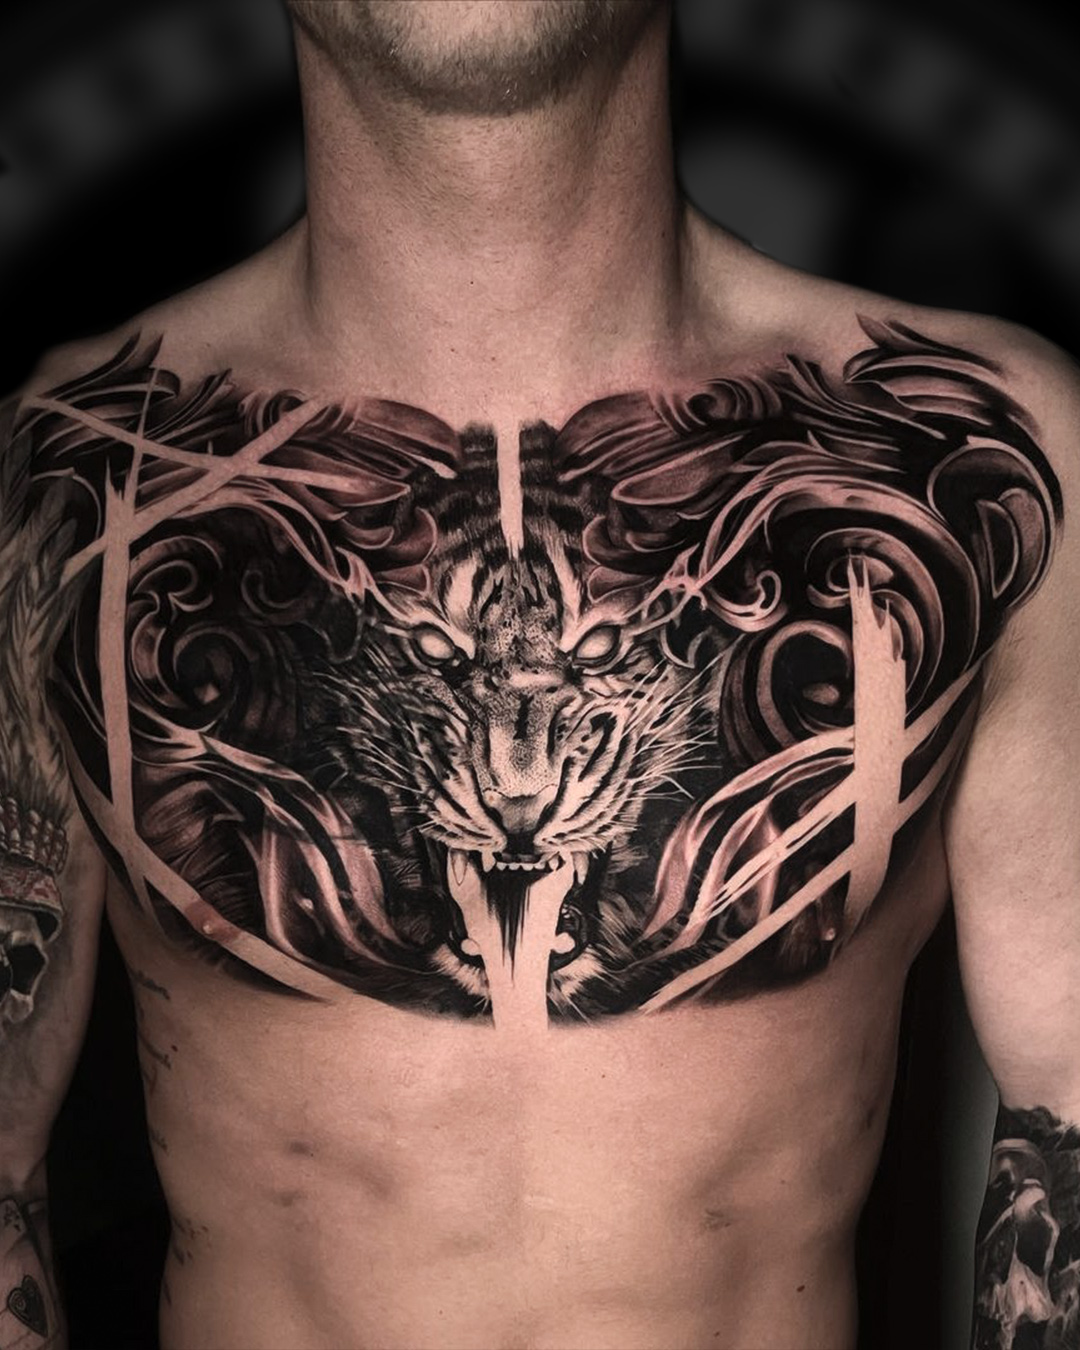 Tiger brystkasse tattoo fra Christina i Beauty and the Beast Tattoo - Herning